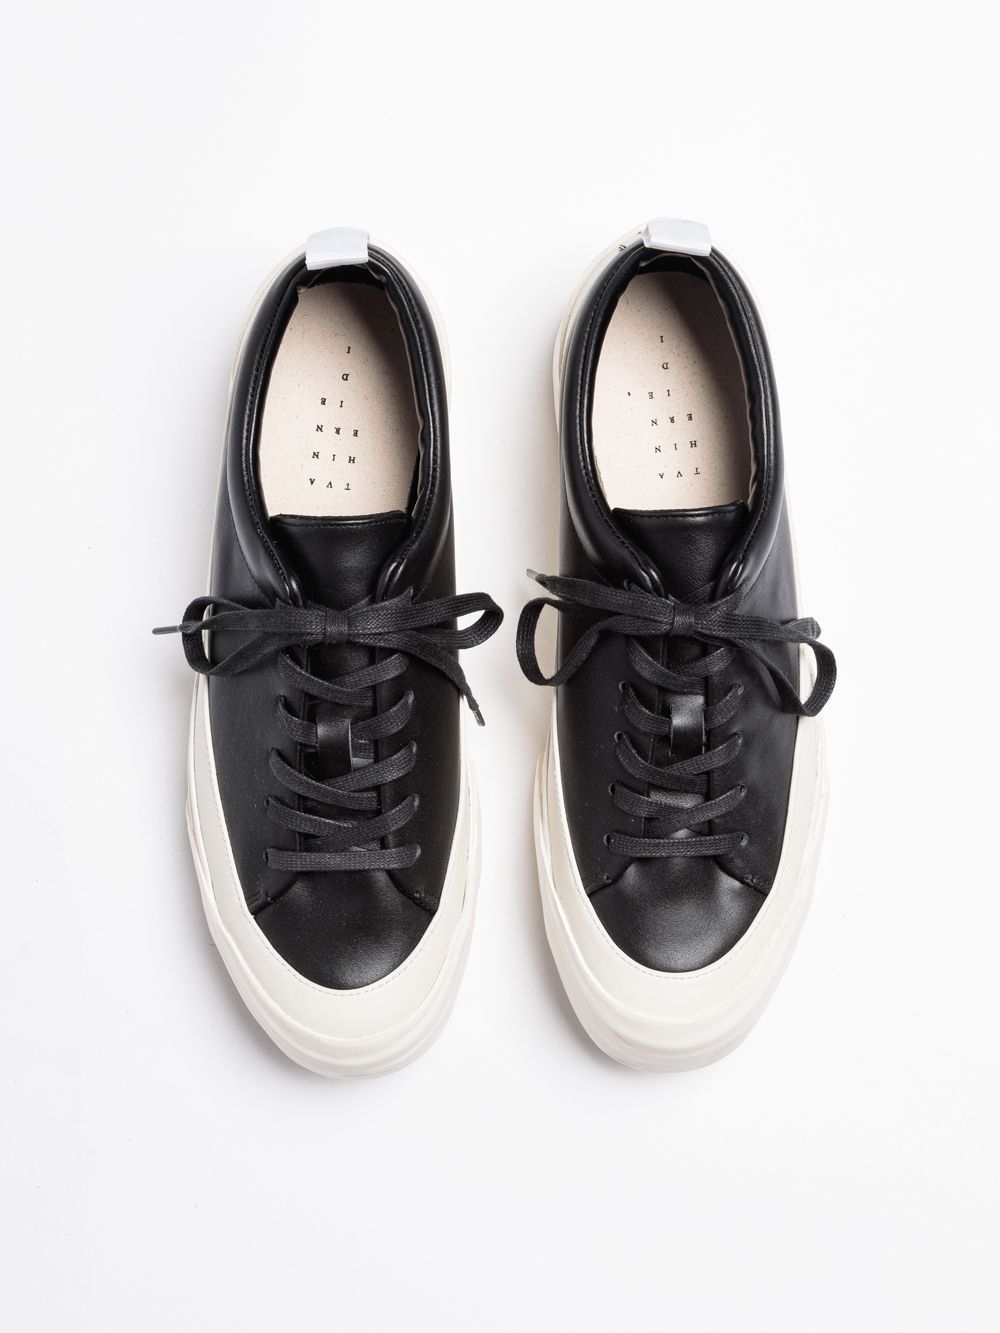 Low Cut Leather Sneakers"Black/White"/ローカットレザースニーカー"ブラック/ホワイト"